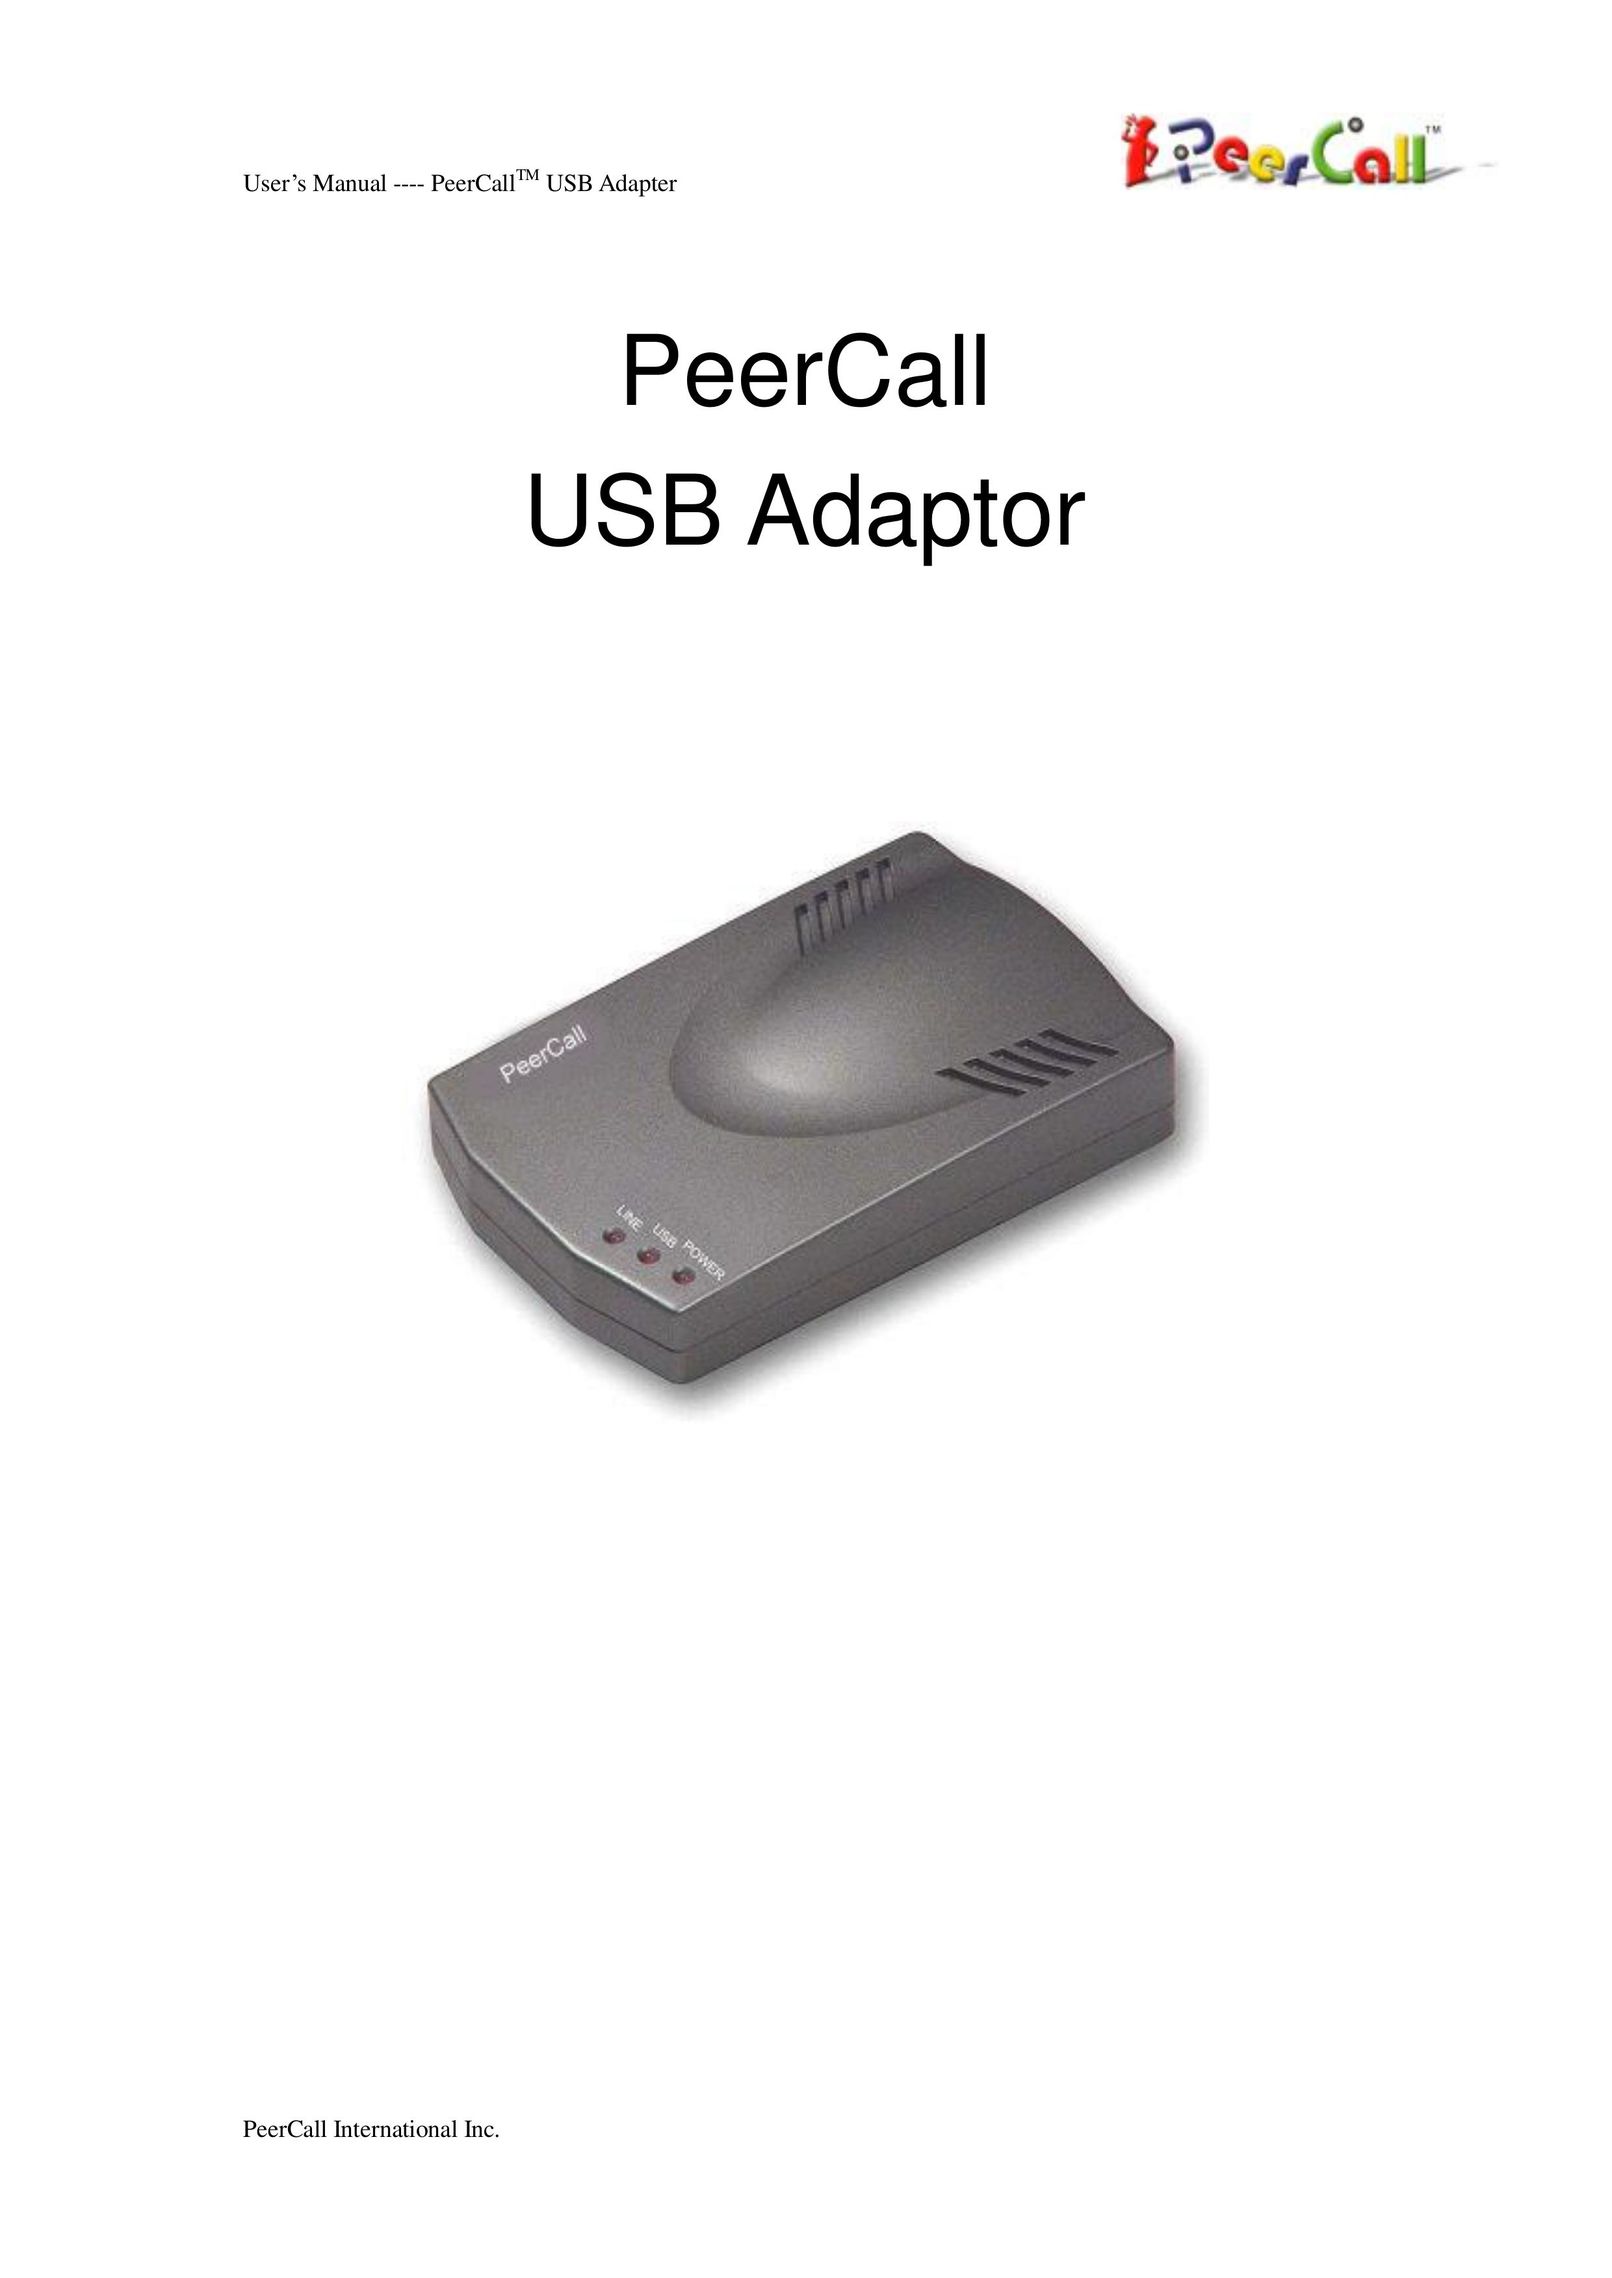 PeerCall USB Adaptor Network Card User Manual